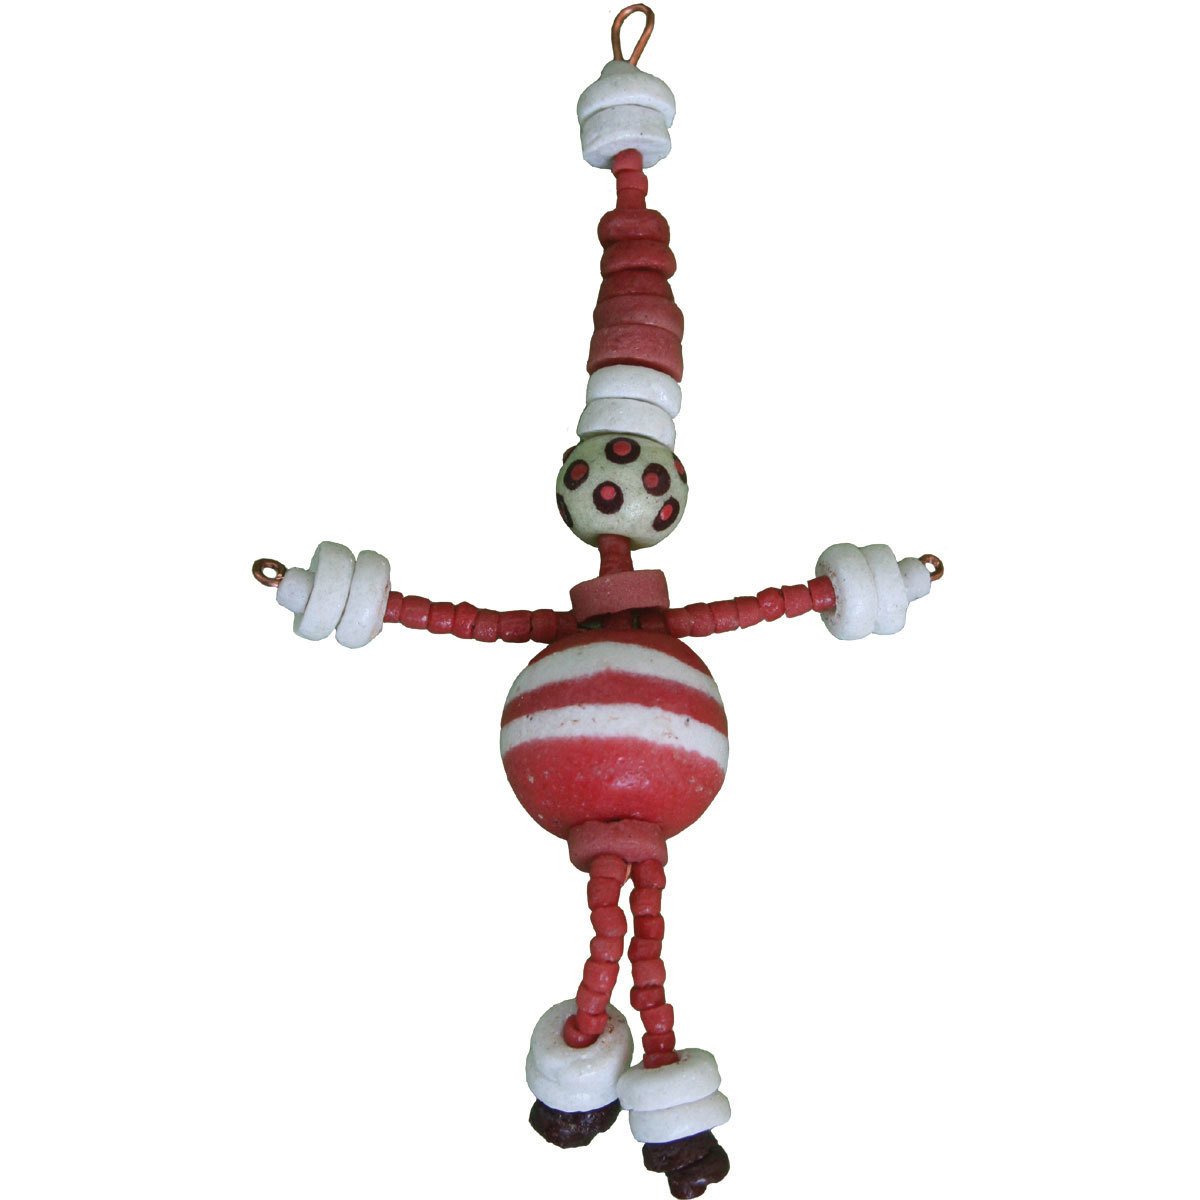 Gm50200010-595206 Handmade & Fair Trade Recycled Glass Bead Santa Ornament